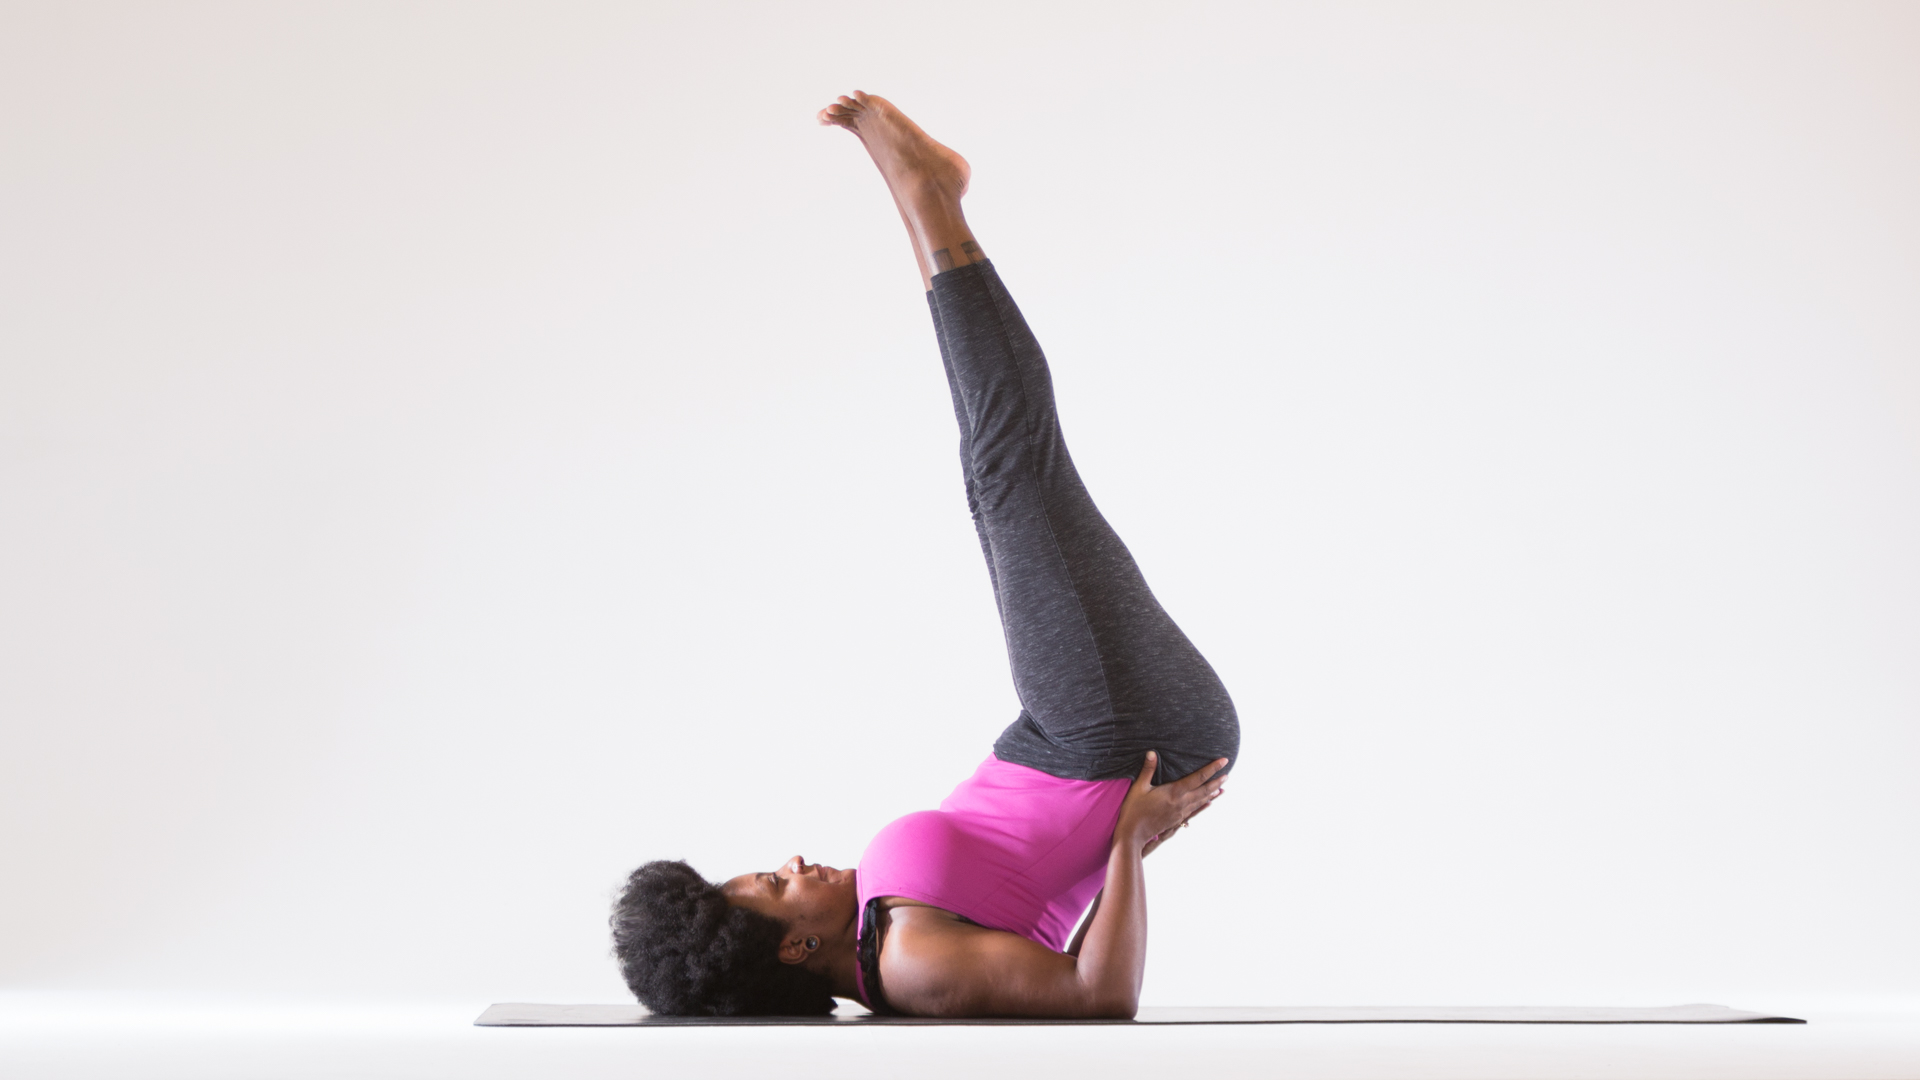 Legs up the wall pose / Viparita Karani - Fertility Yoga pose spotlight -  Bettina Rae